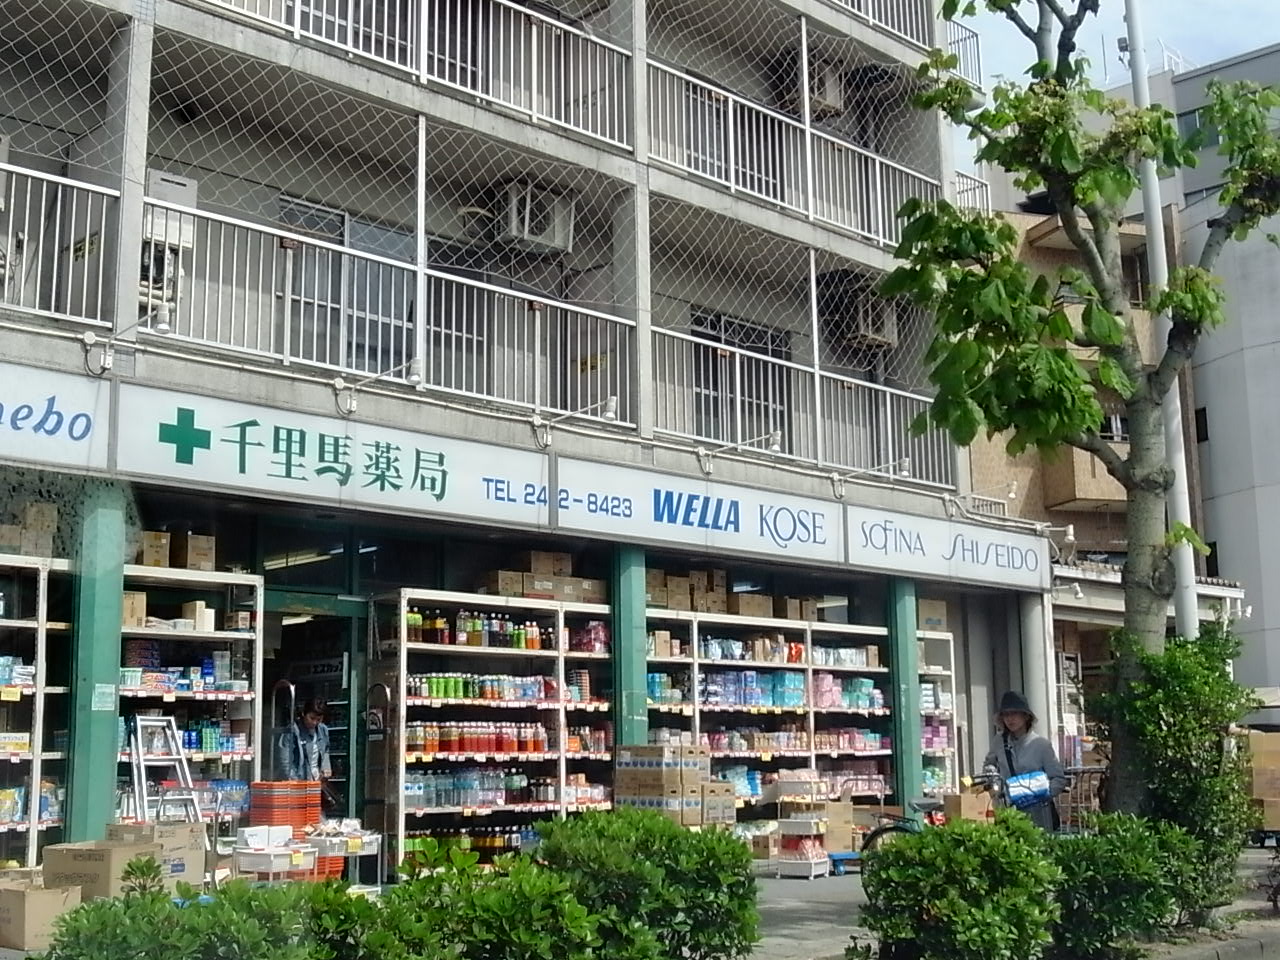 Dorakkusutoa. Chisato horse pharmacy Shinyoung shop 318m until (drugstore)